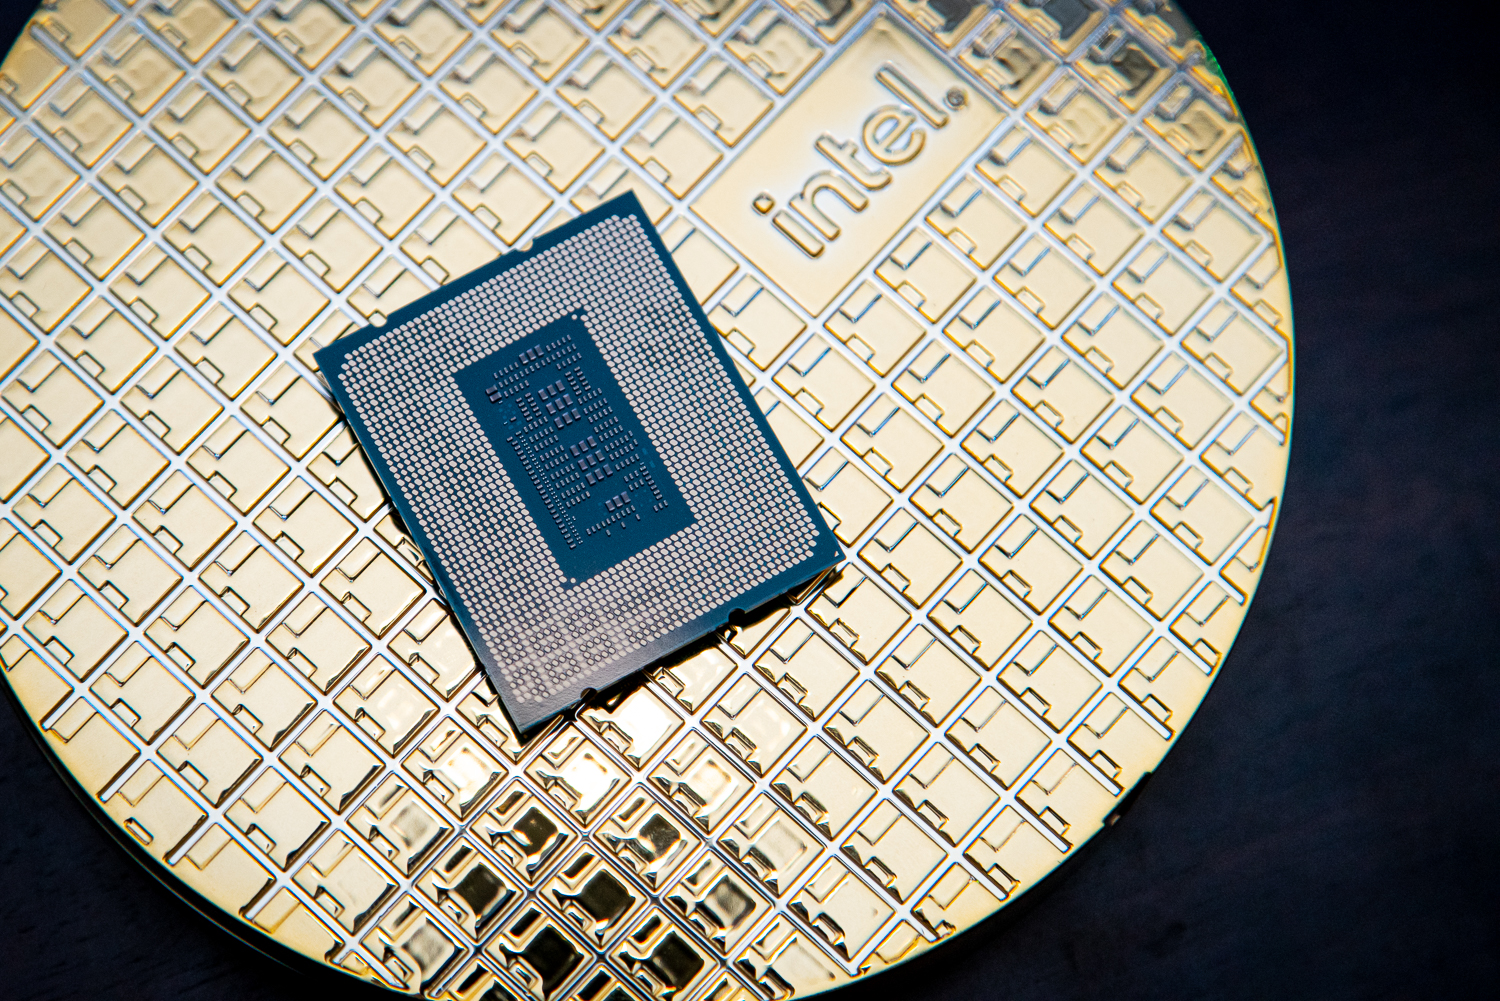 Intel 14th-gen Meteor Lake performance